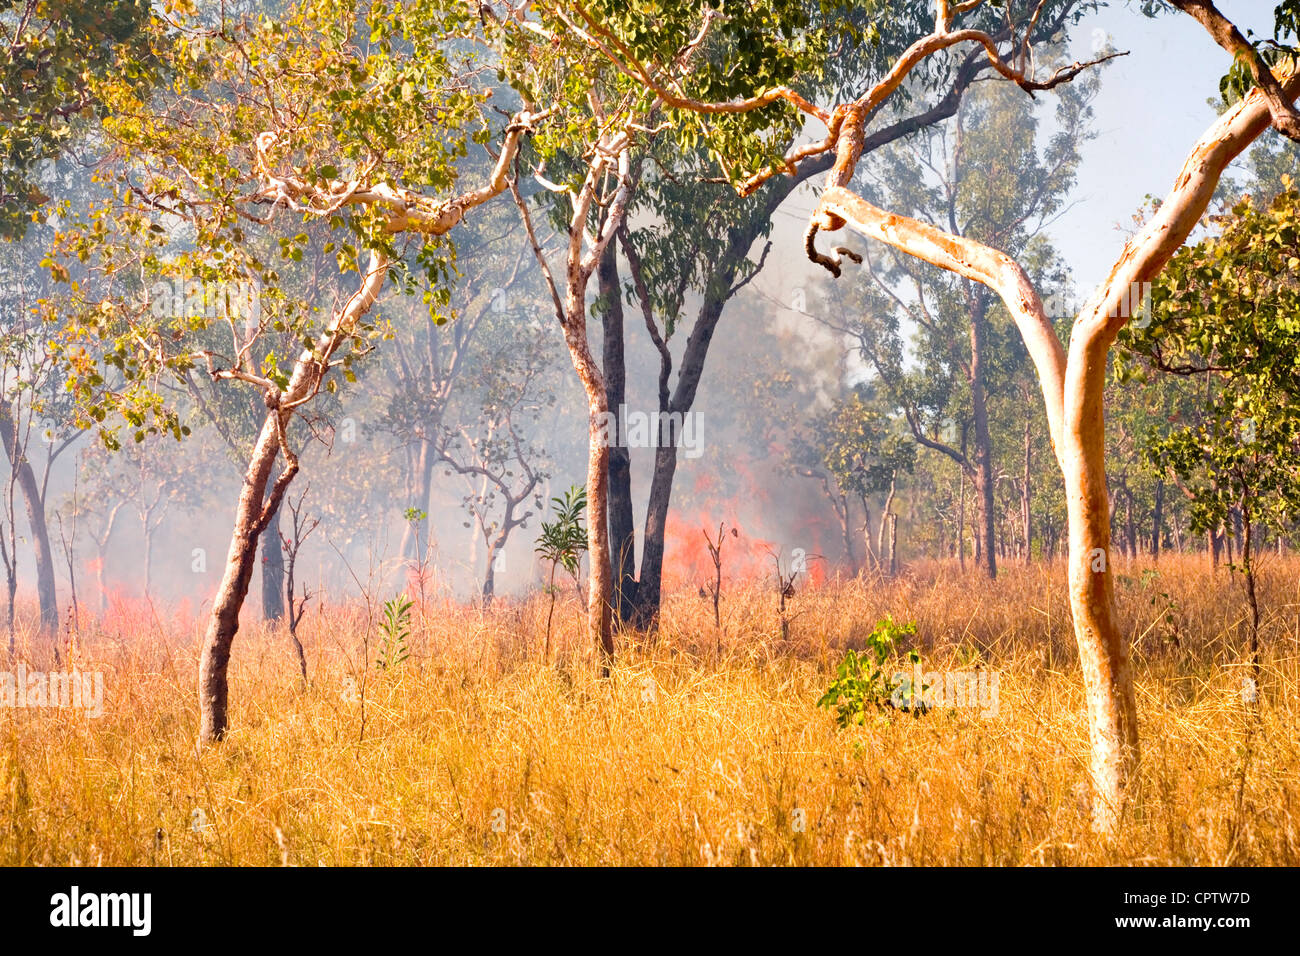 Bushfire in outback Northern Territory Australia Stock Photo